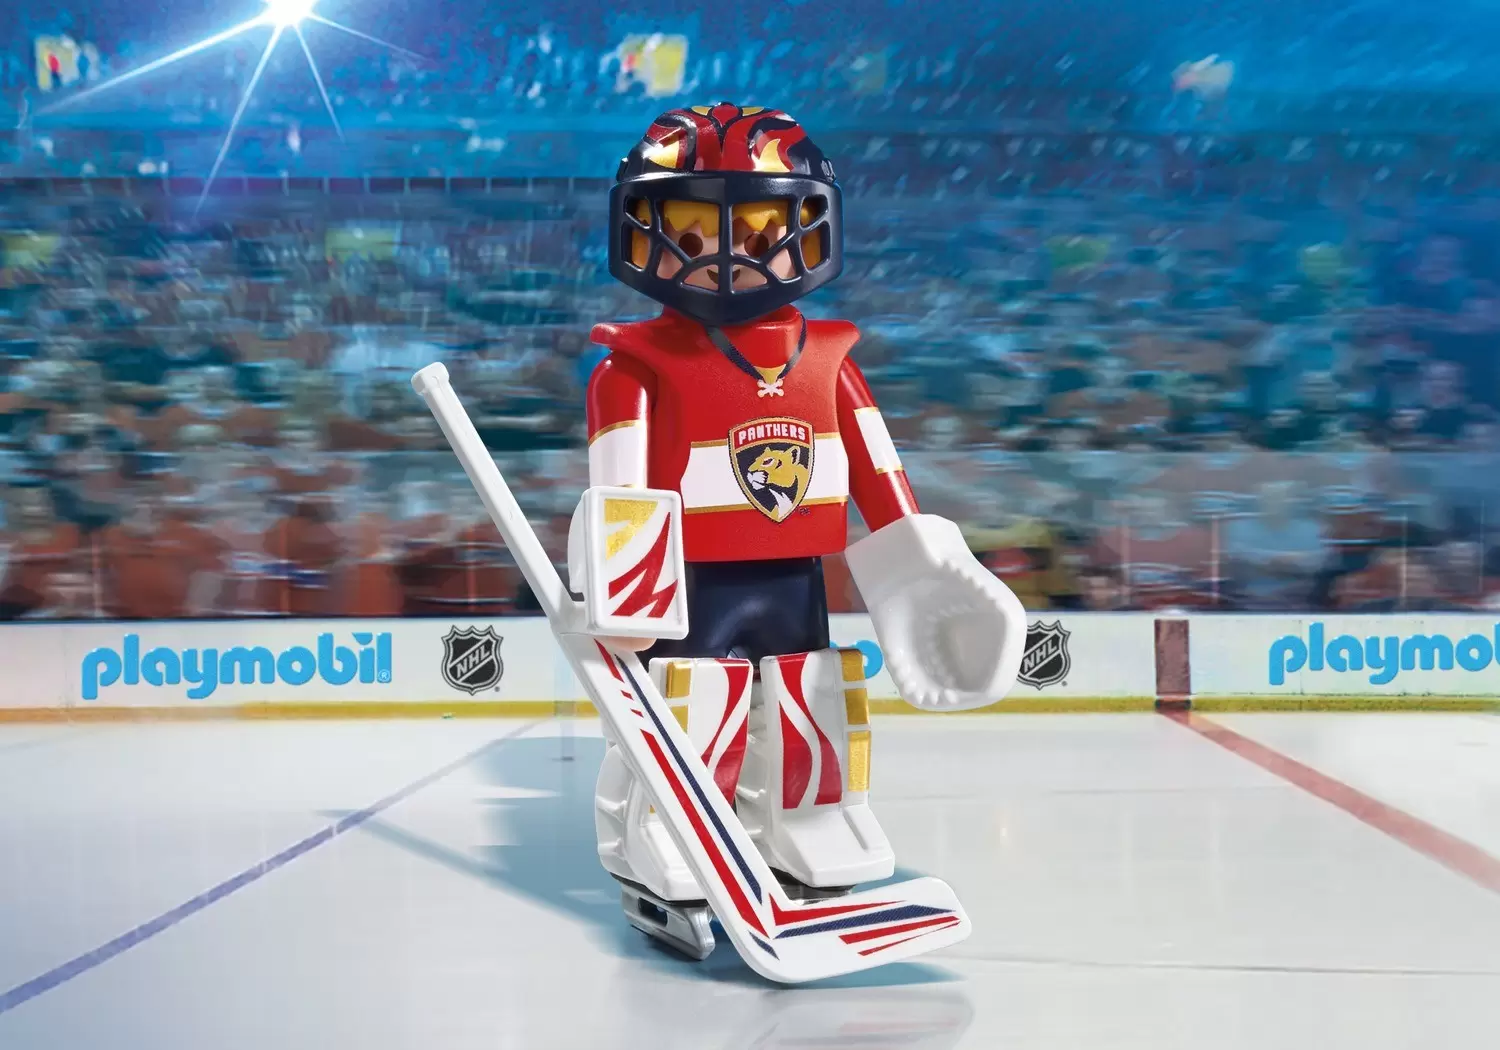 NHL Playmobil - NHL Florida Panthers Goalie